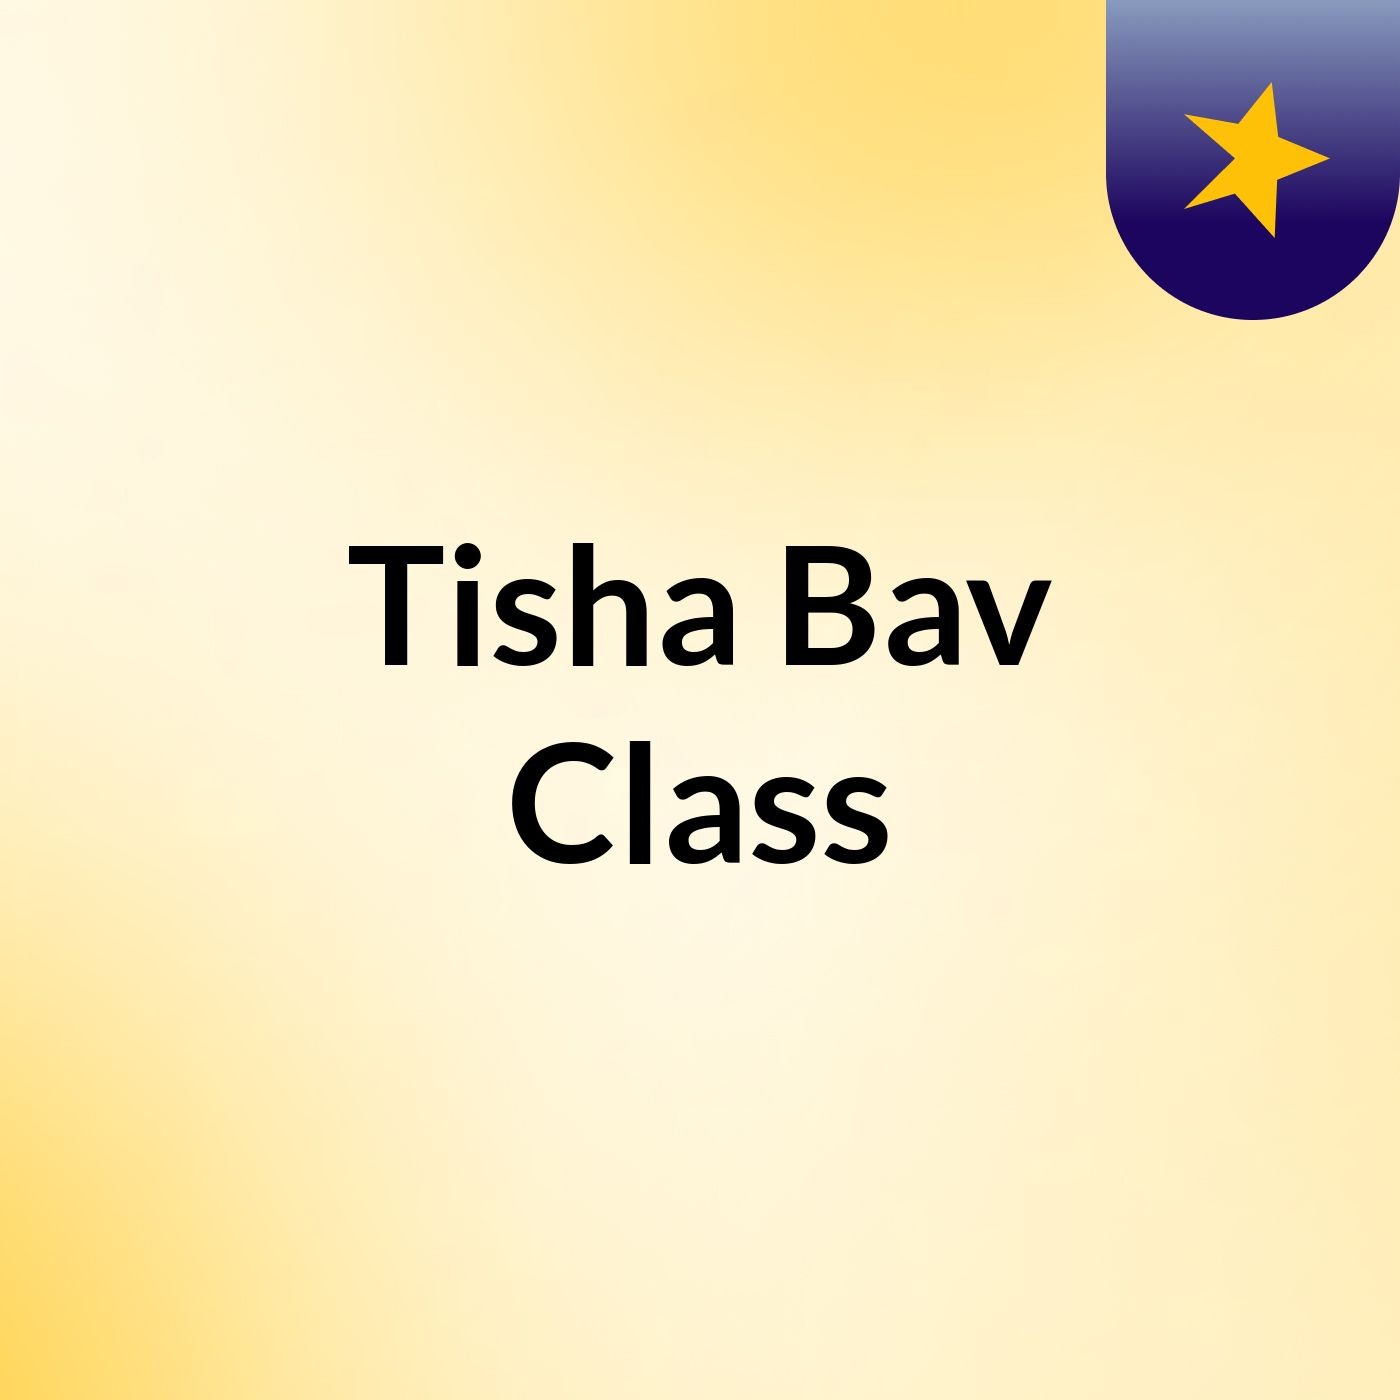 Episode 3 - Tisha Bav Class